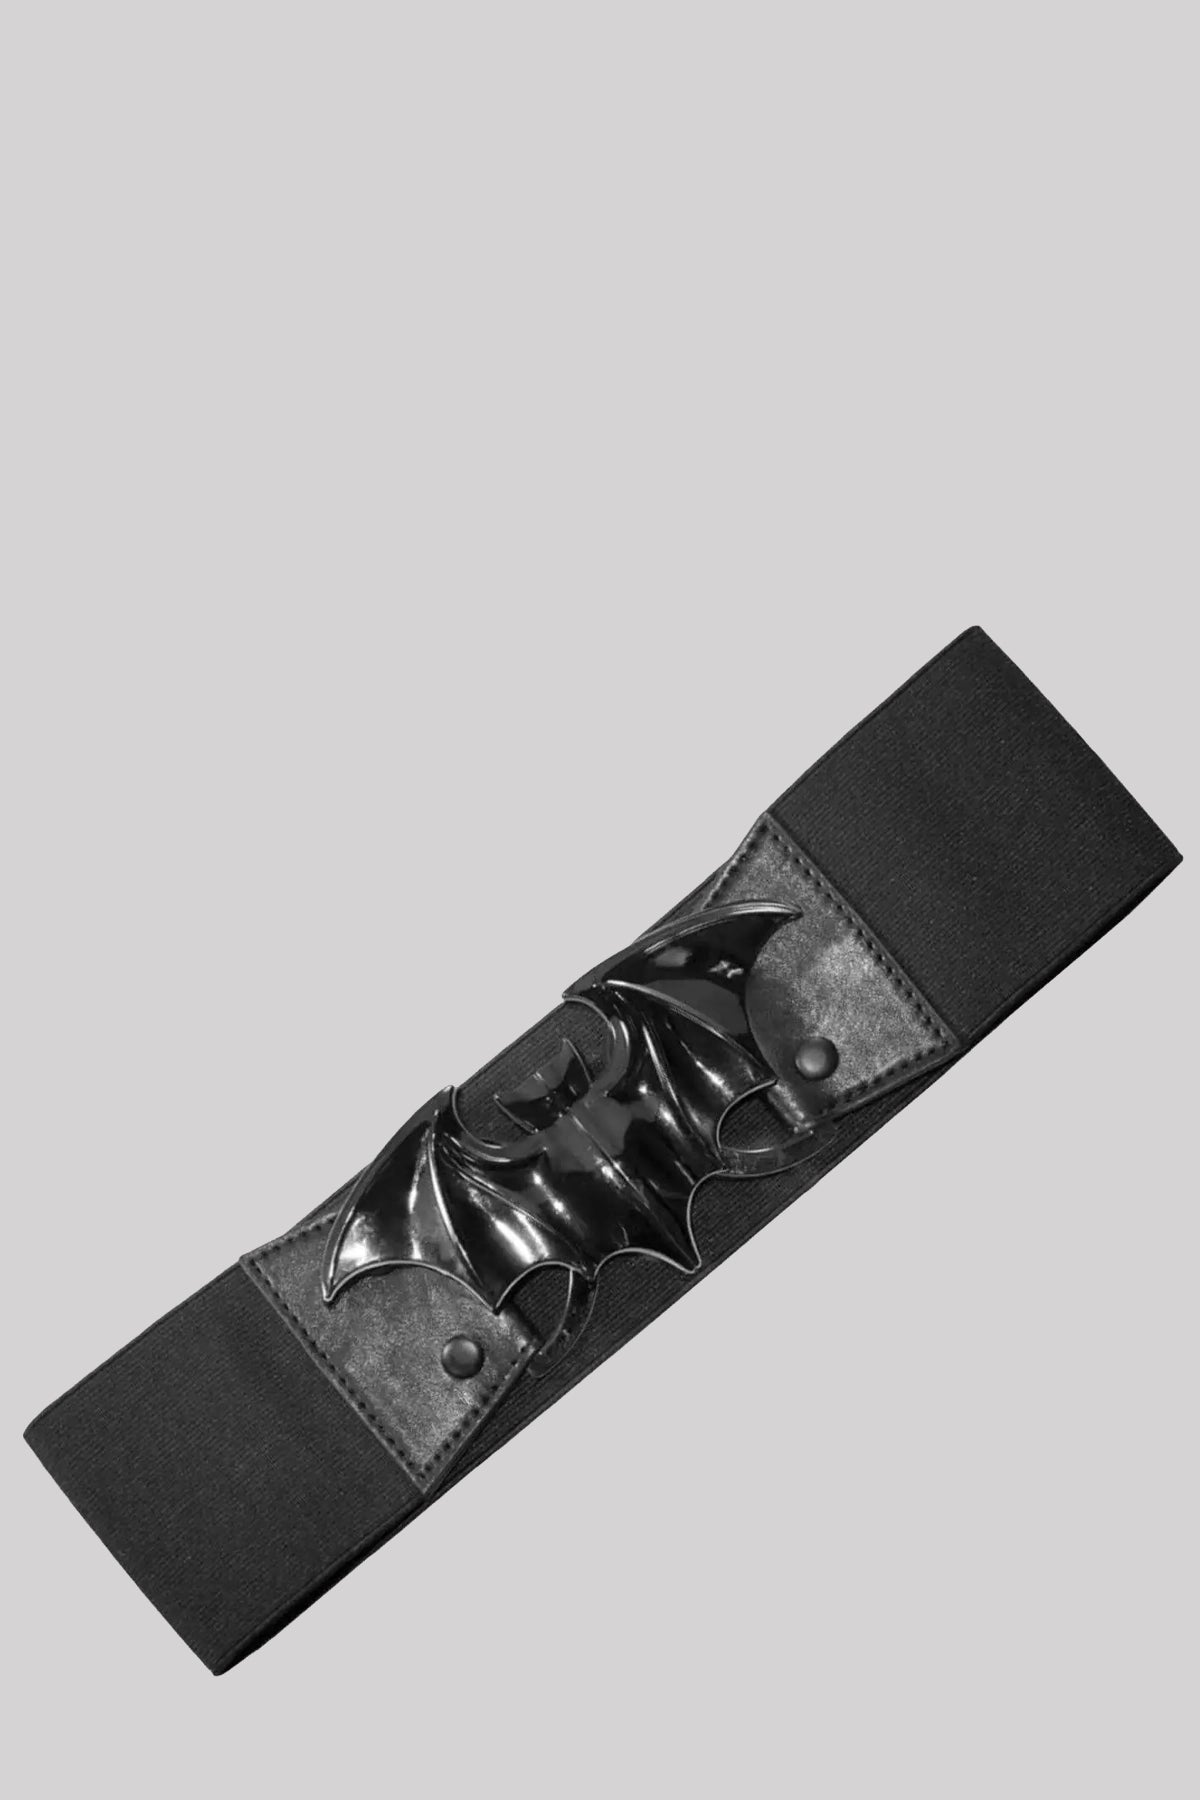 Kreepsville 666 Gothic Bat Elasticated Waist Belt